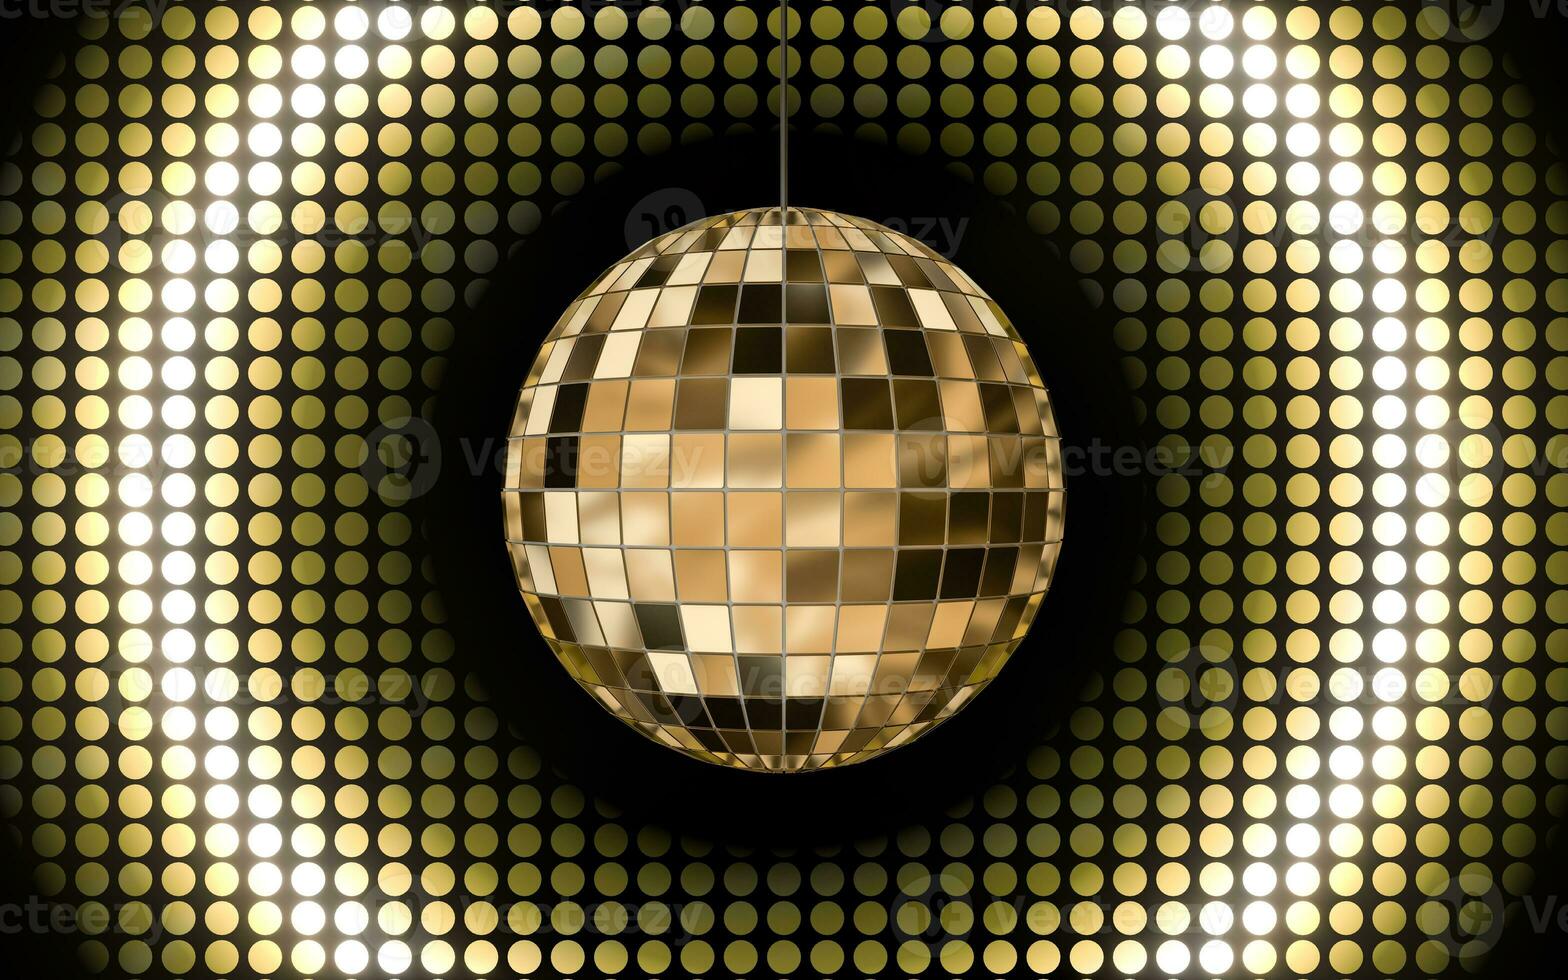 skinande disko boll med gyllene ljus bakgrund, 3d tolkning. foto